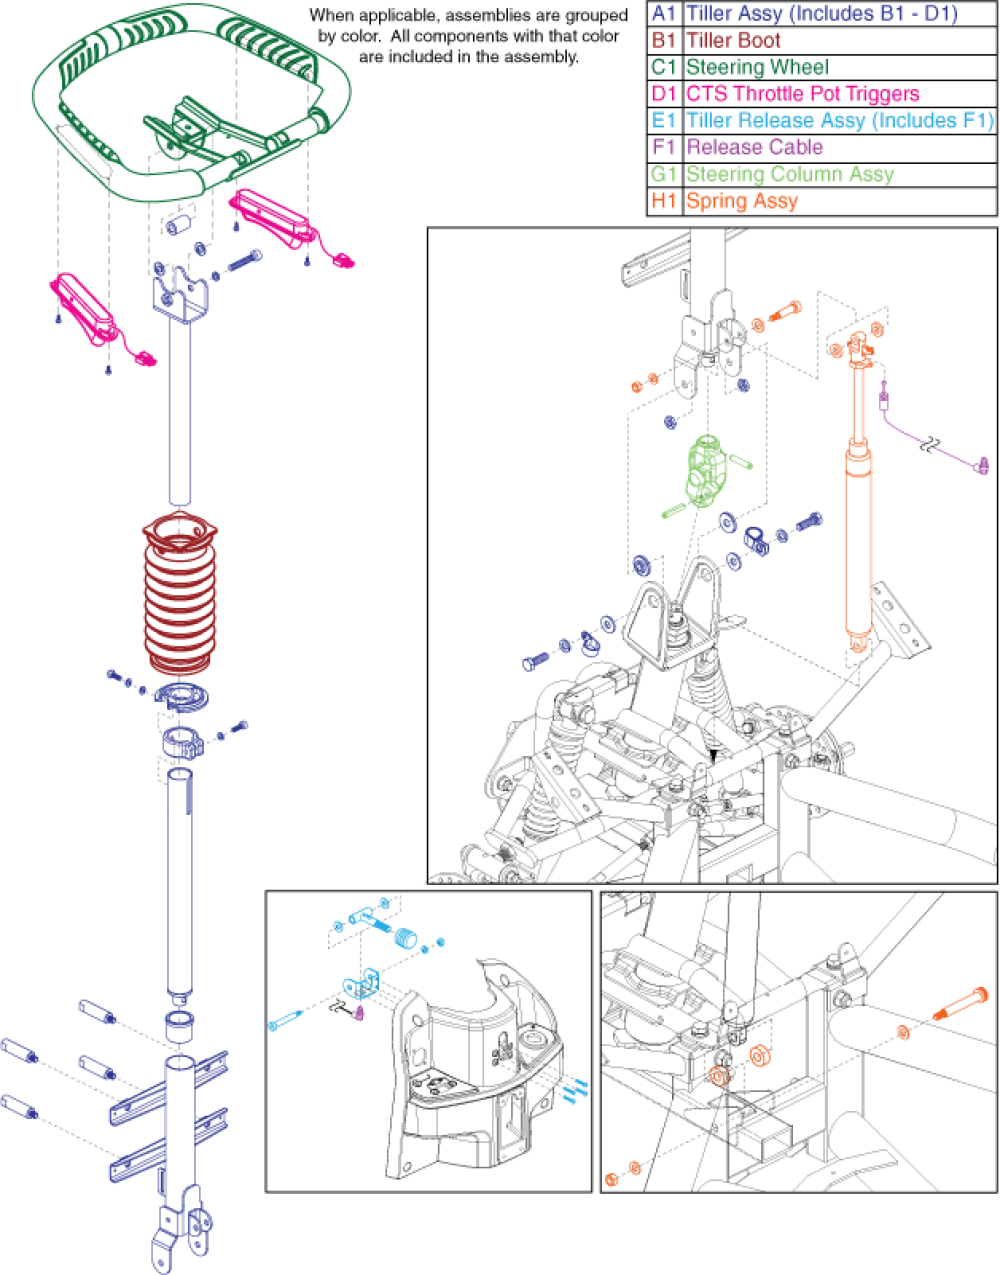 Mv714 Tiller Assy parts diagram